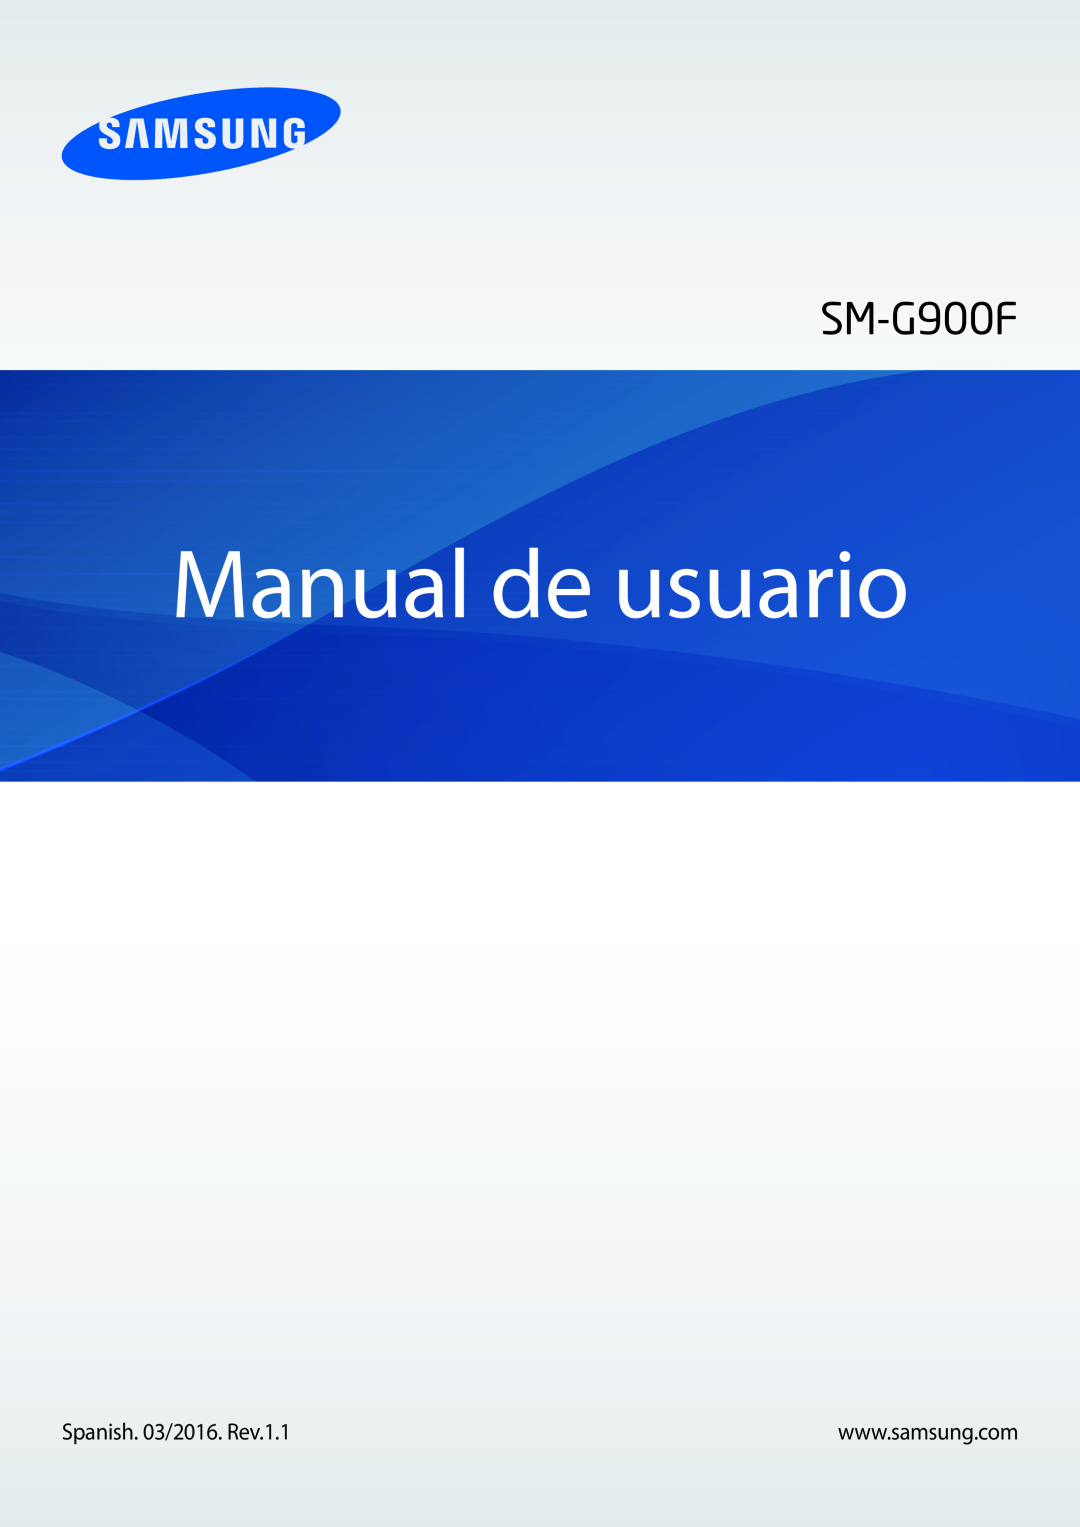 Samsung SM-G900FZWADBT, SM-G900FZKADBT, SM-G900FZBAXEF, SM-G900FZWAXEF, SM-G900FZDAXEF manual Manual de usuario 